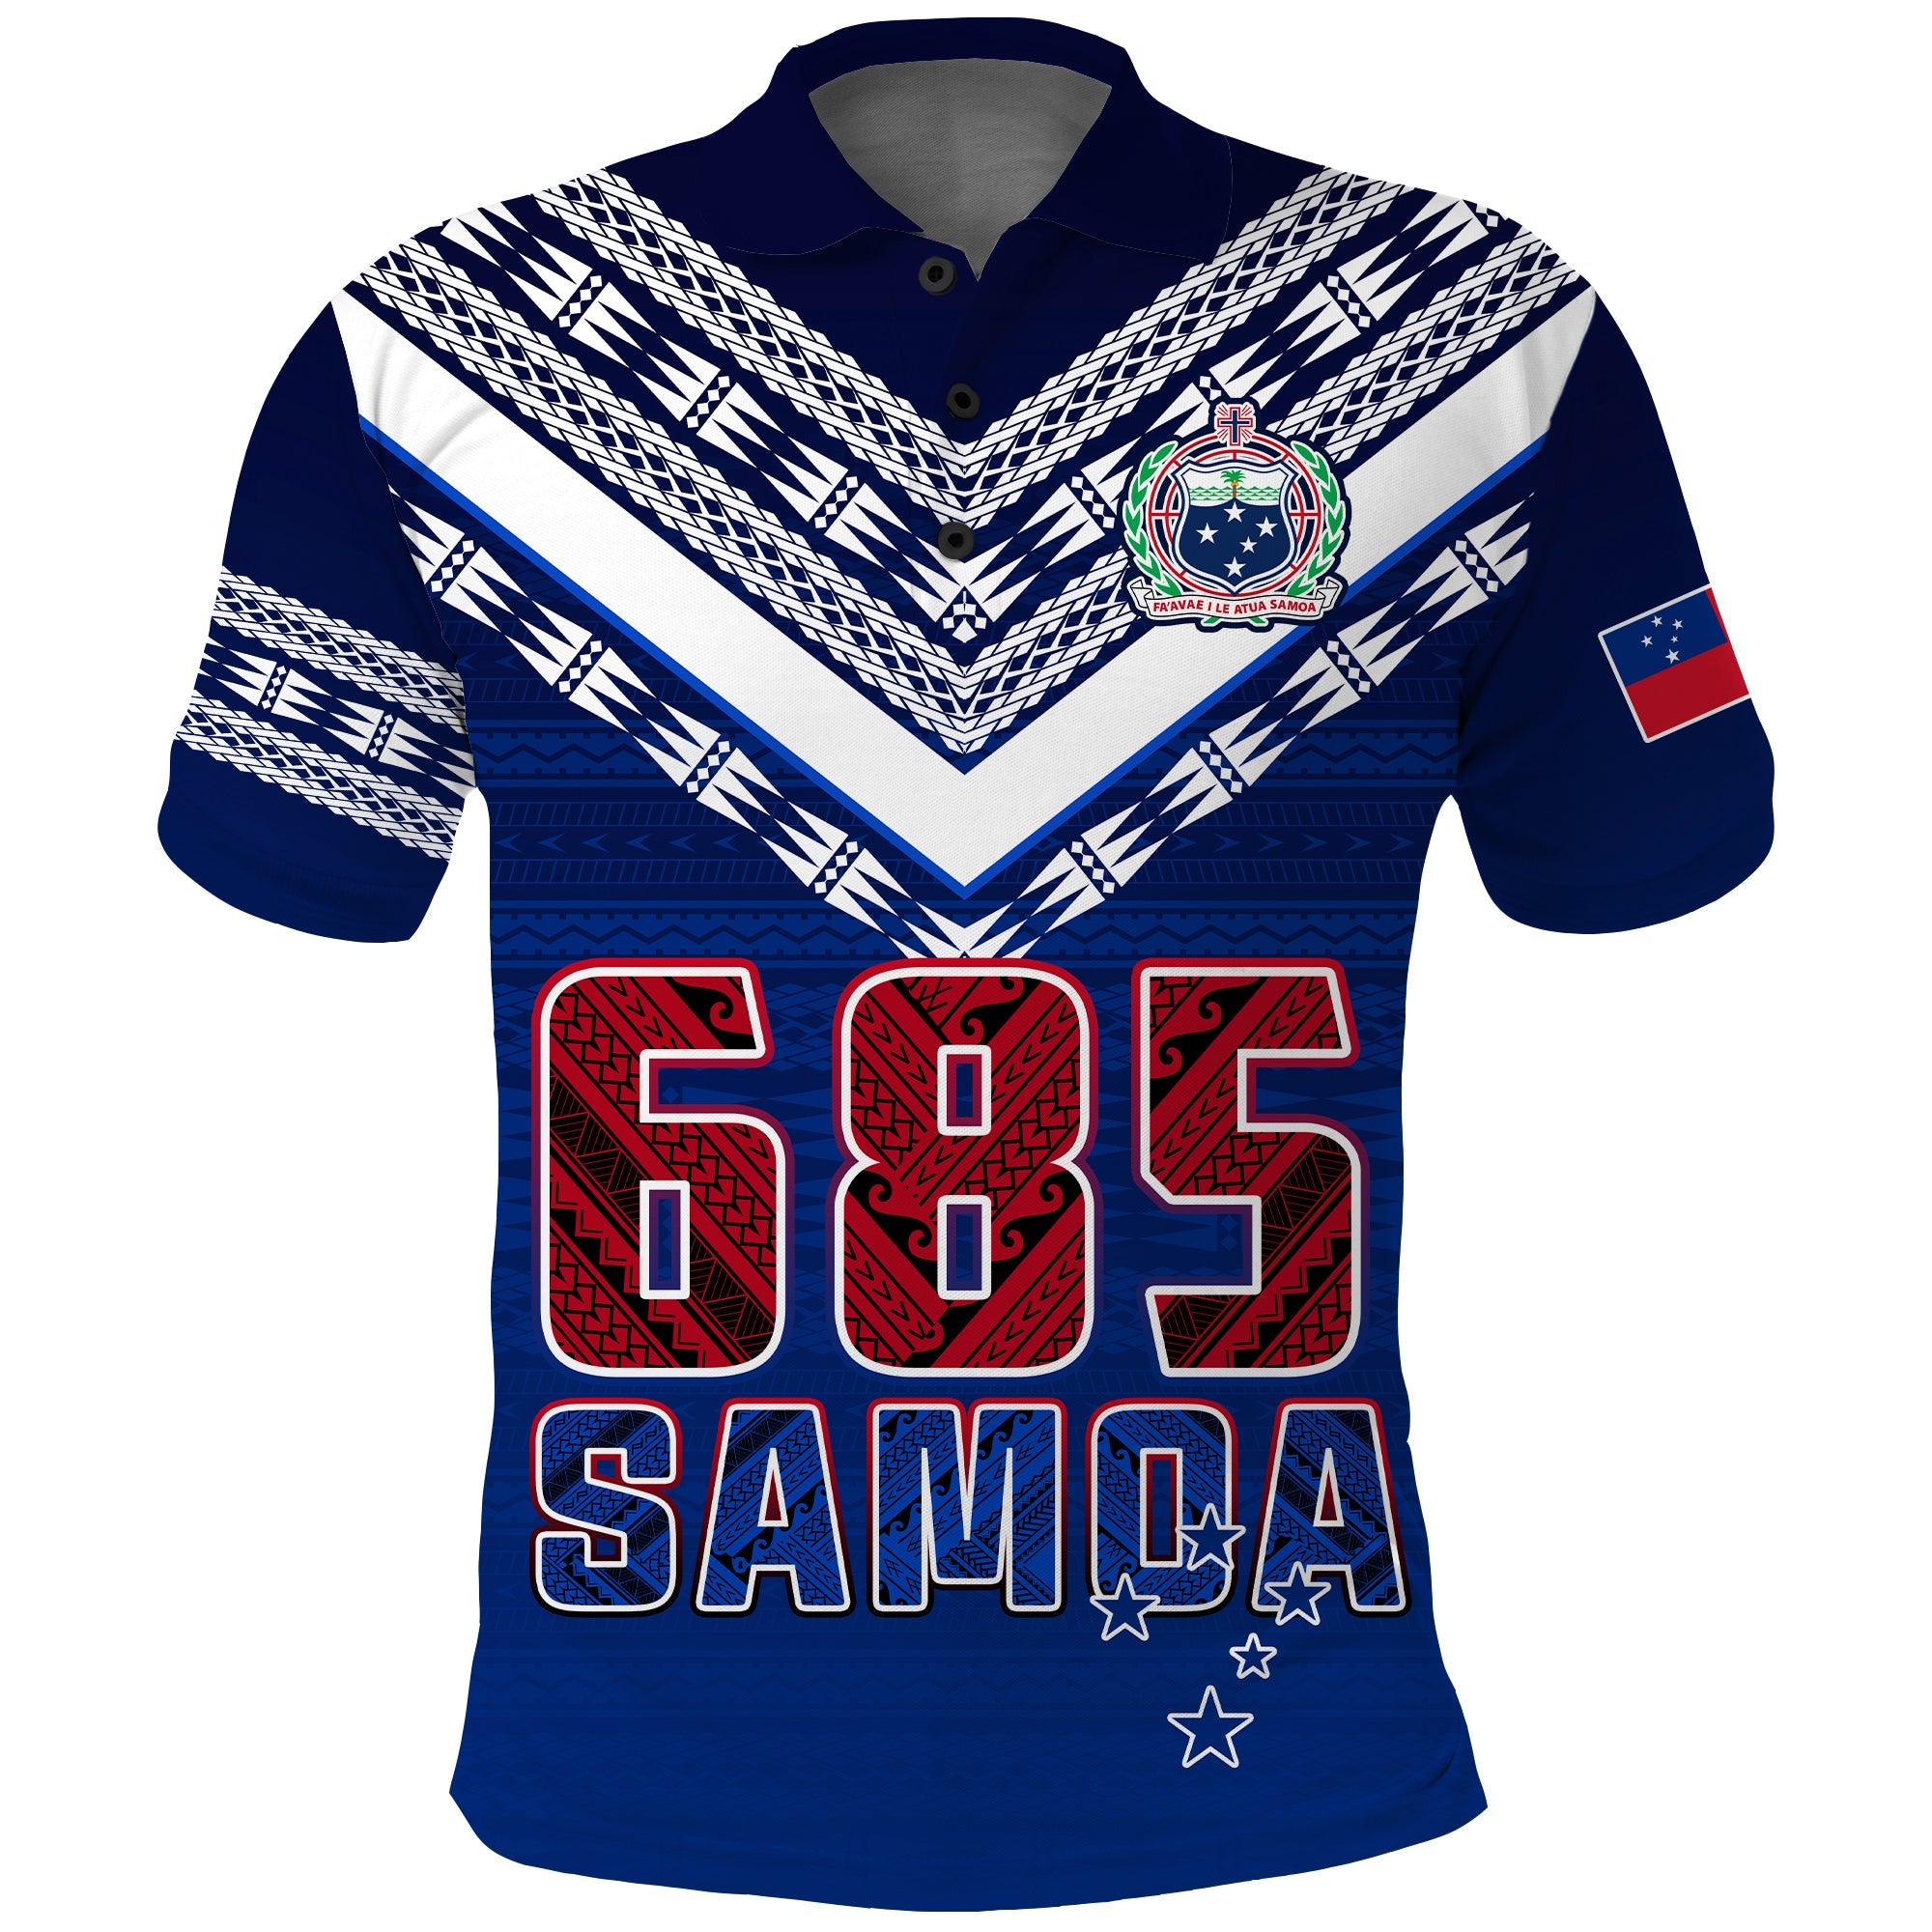 Samoa 685 Polo Shirt Uso Aso Uma Toa Samoa Rugby History Made LT13 Blue - Polynesian Pride